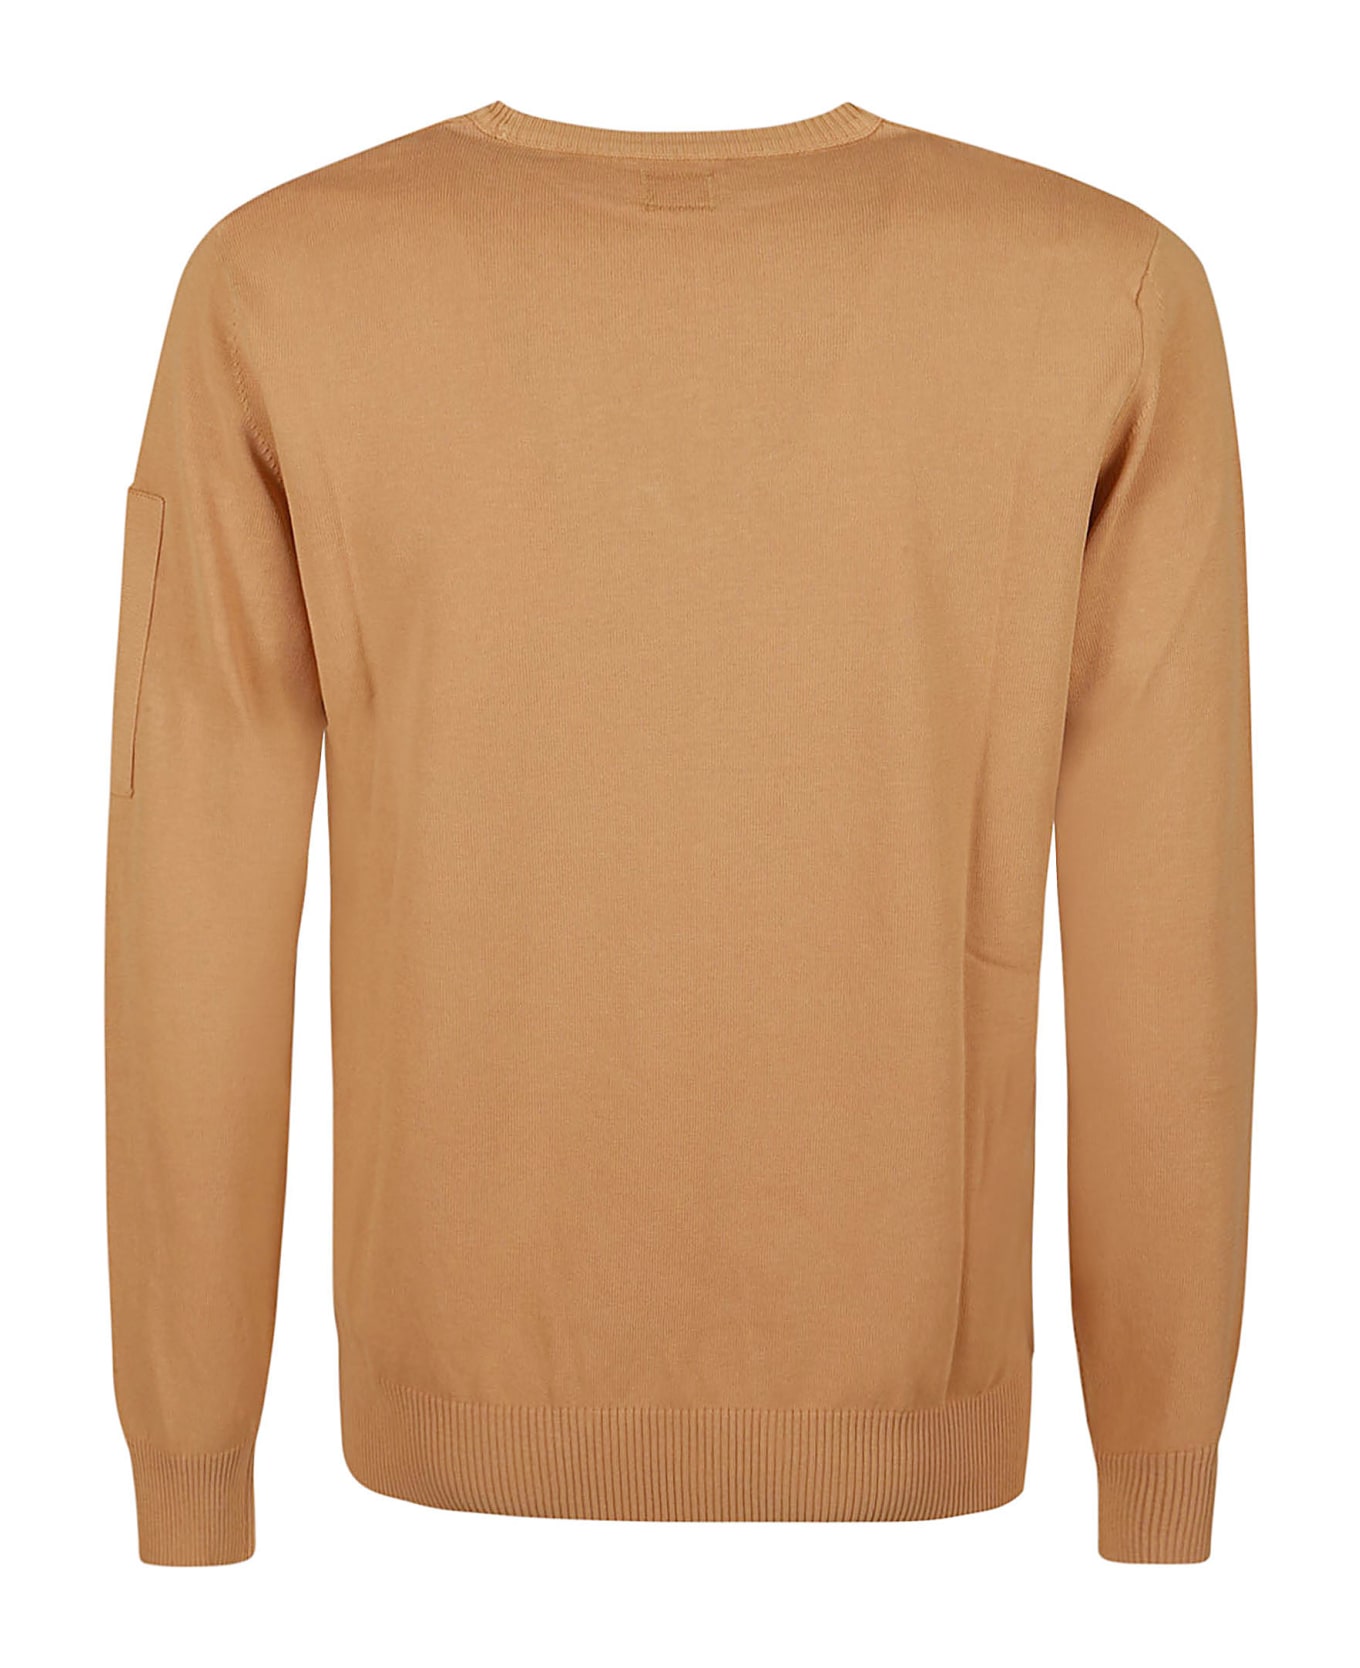 C.P. Company Old Dyed Crepe Sweatshirt - Brown